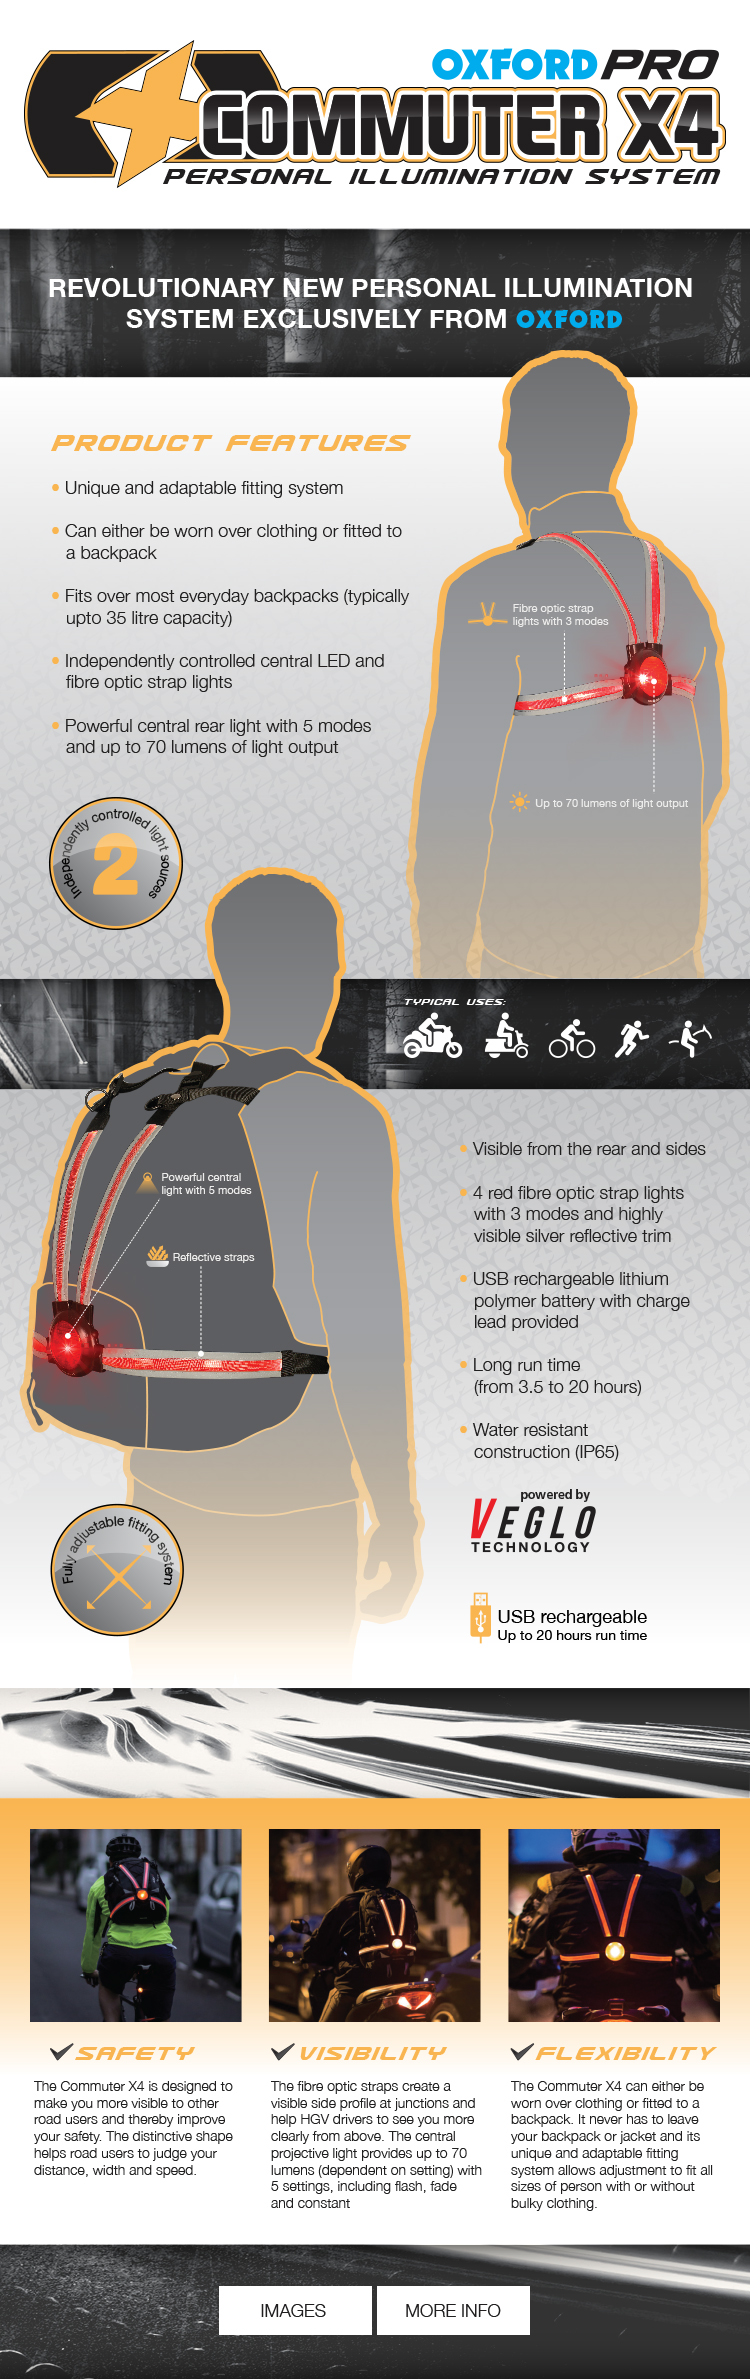 Email marketing   campaign digital design product e-shot motorcycle oxford HJC Helmet oakley